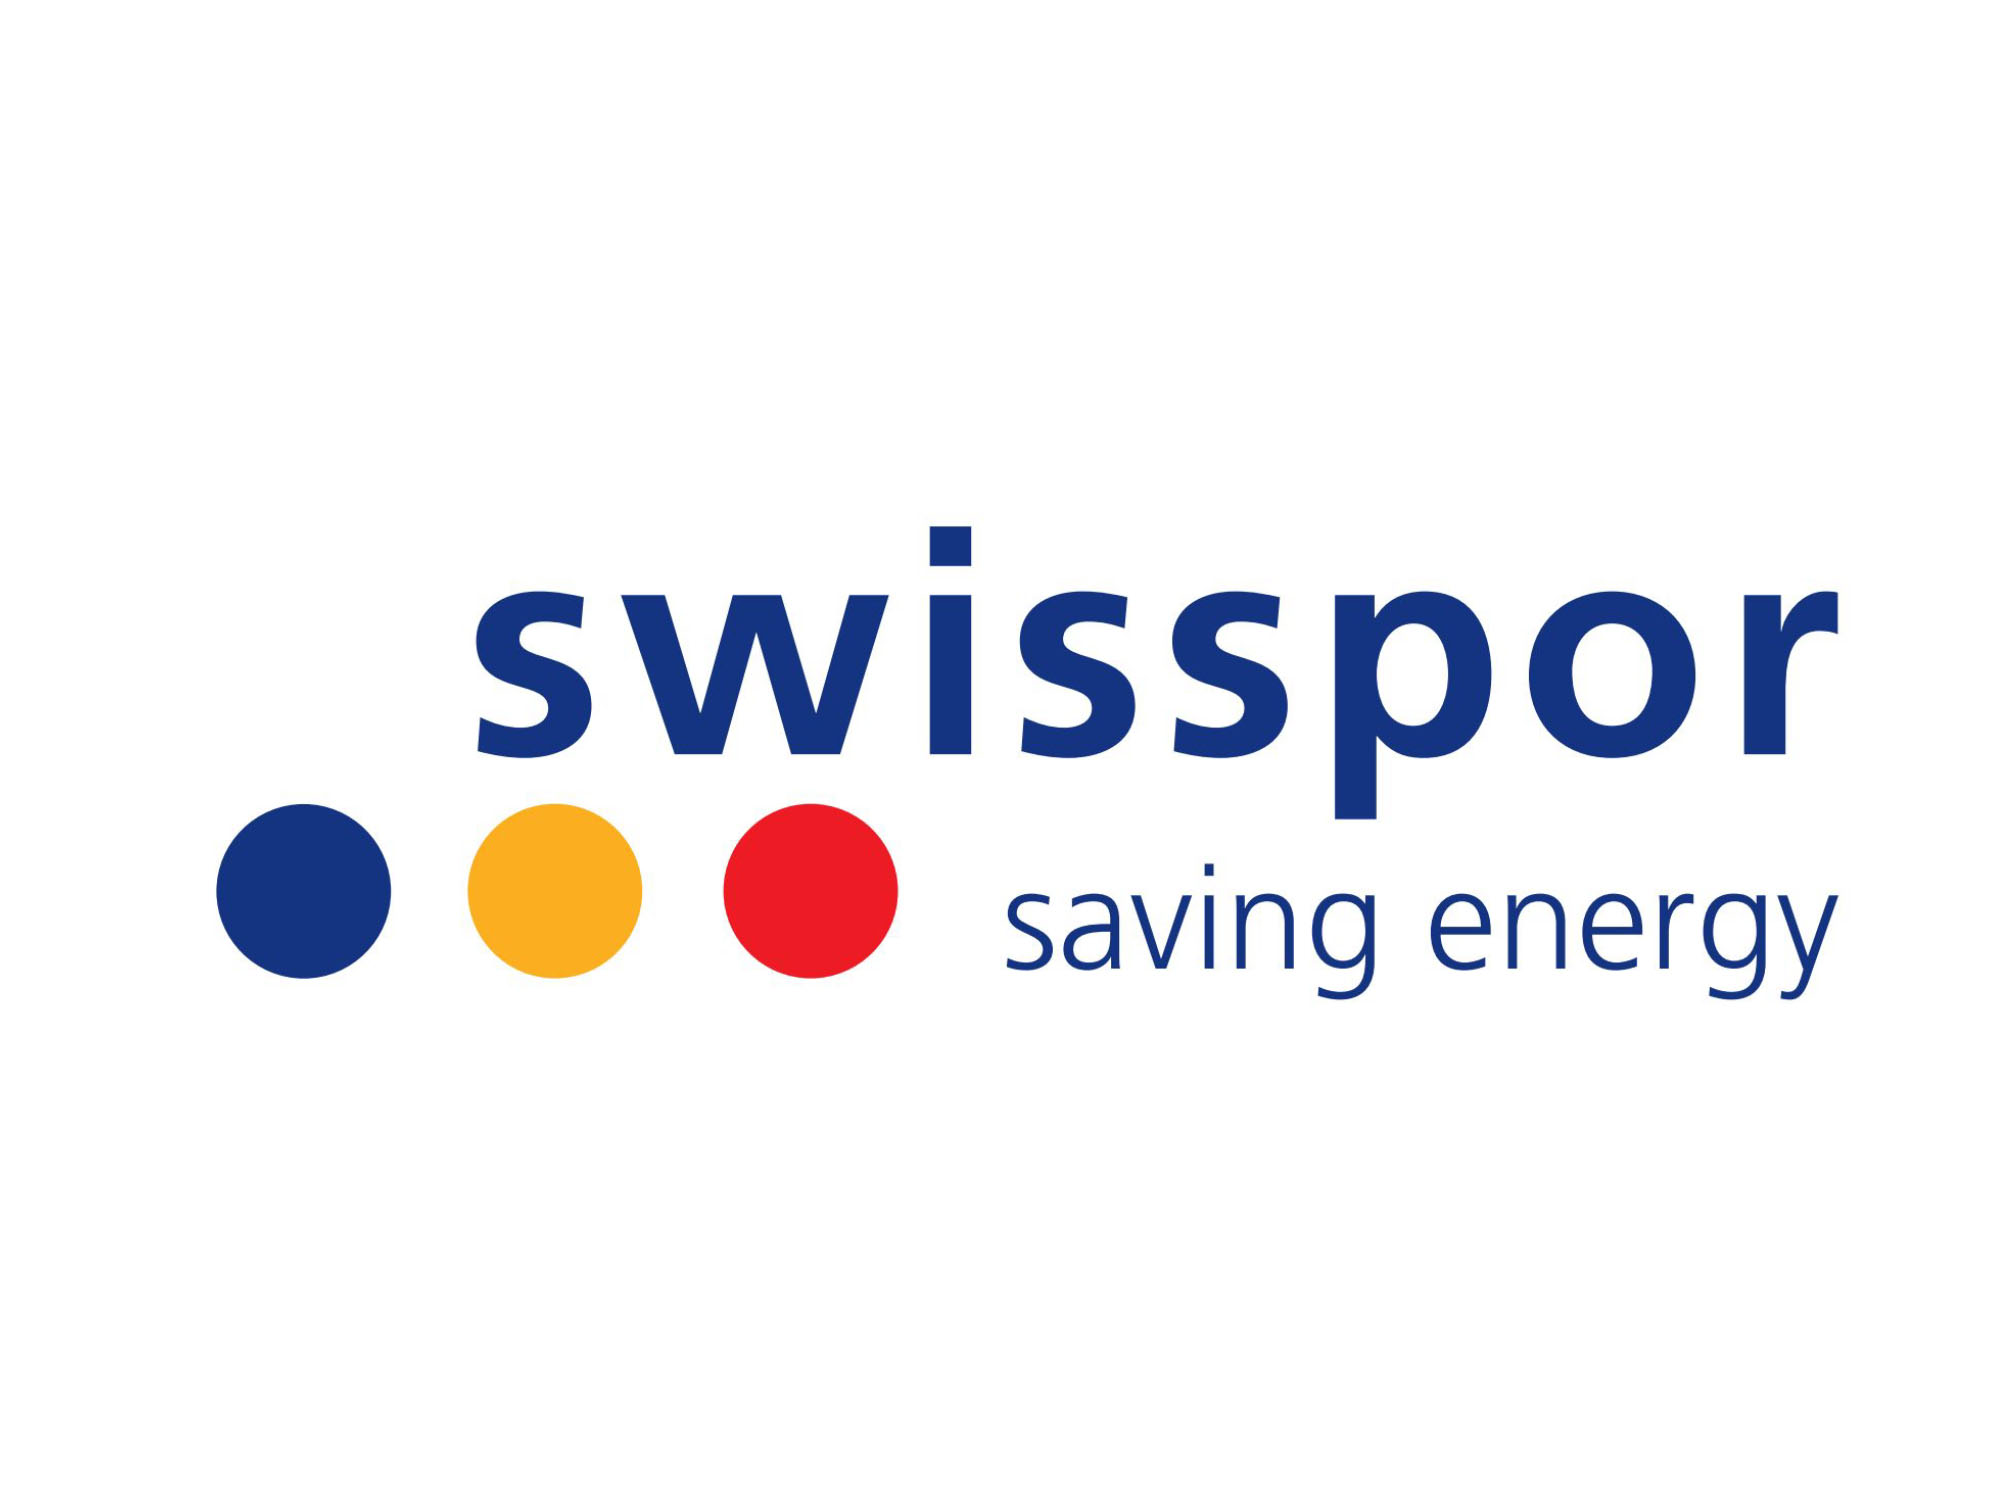 swisspor saving energy